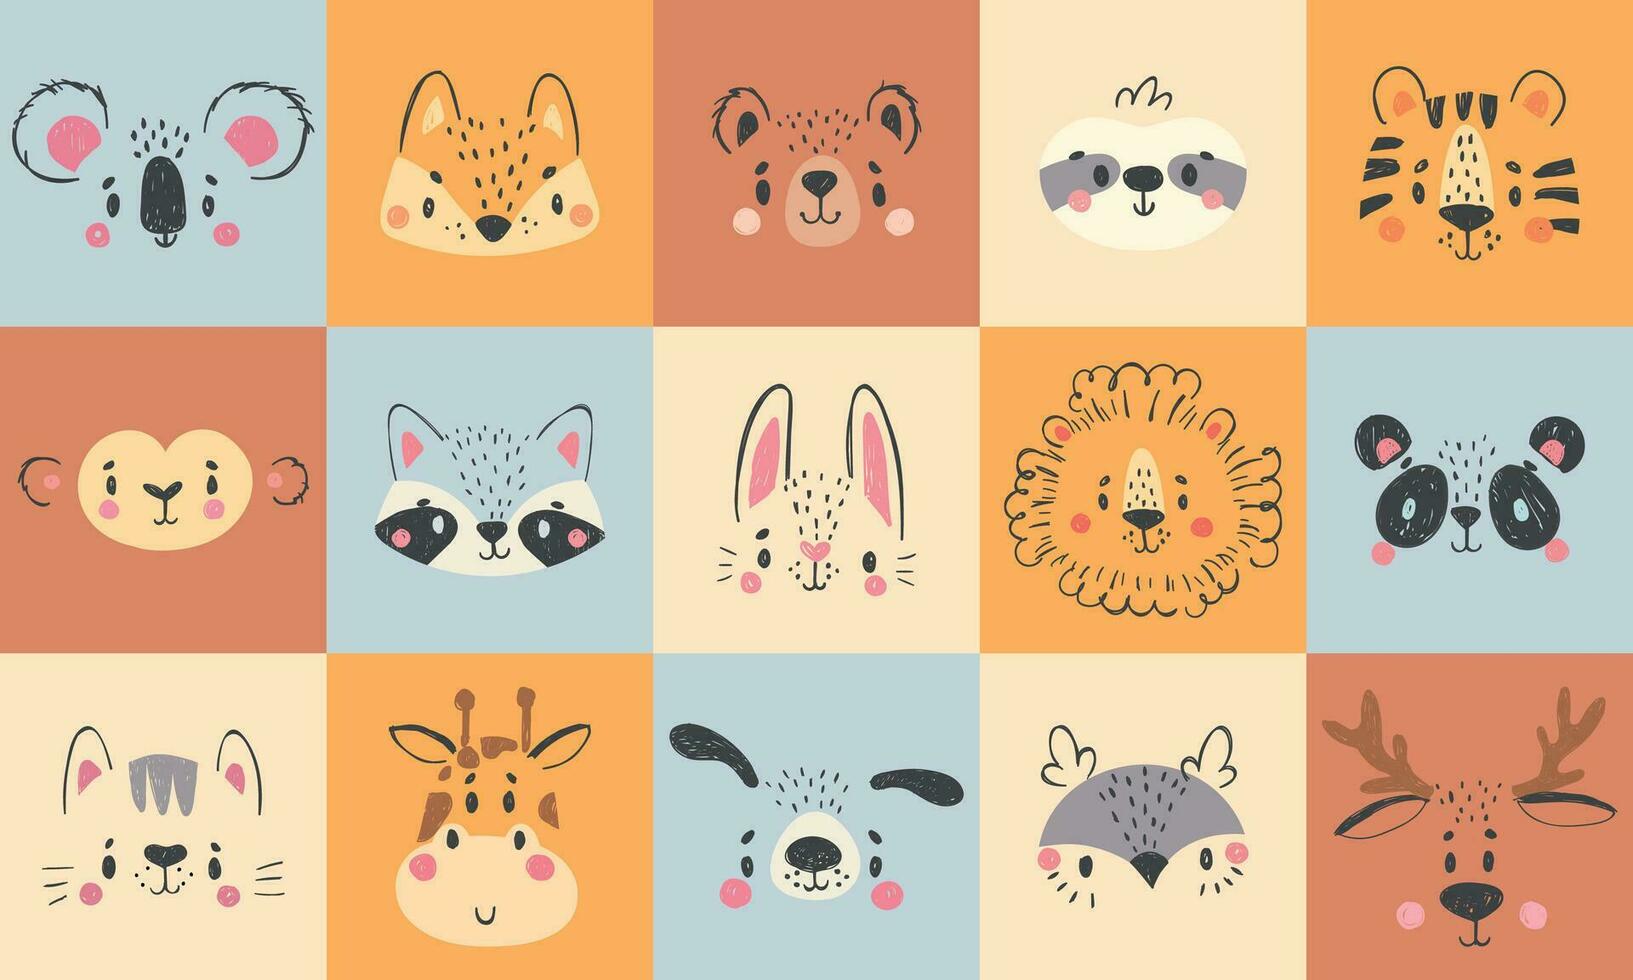 Cute animal portraits. Hand drawn happy animals faces, smiling bear, funny fox and koala cartoon vector illustration set